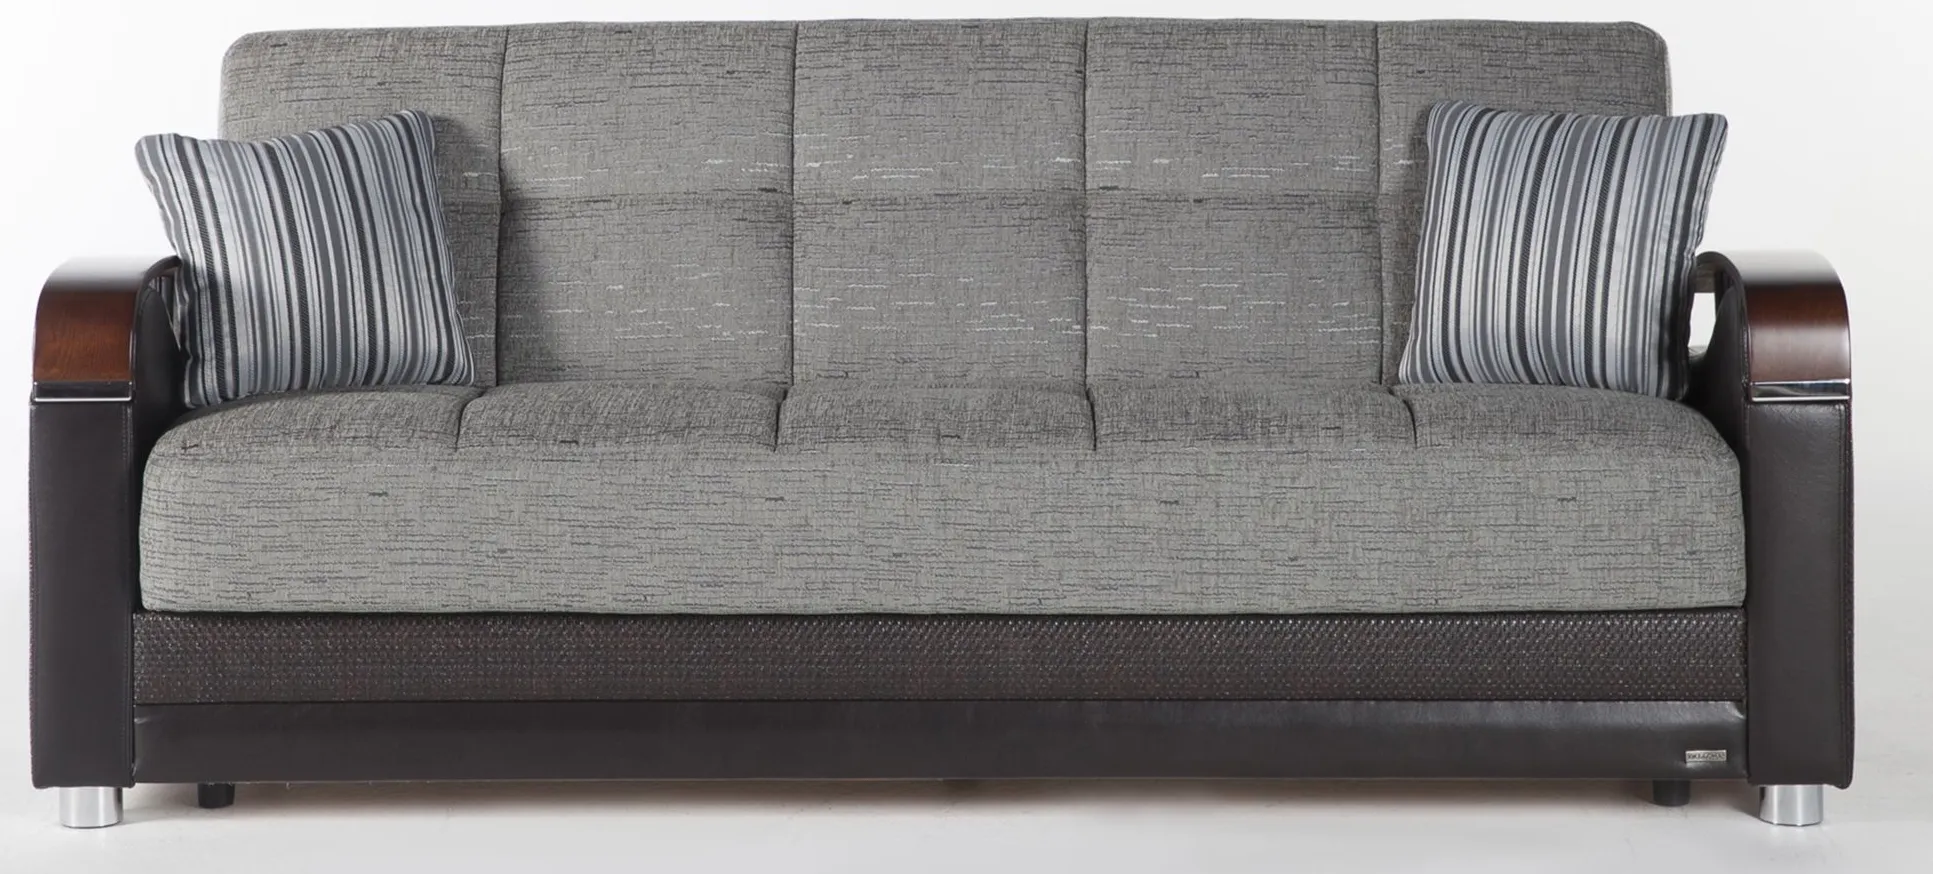 Kylian Sleeper Sofa in Gray by HUDSON GLOBAL MARKETING USA